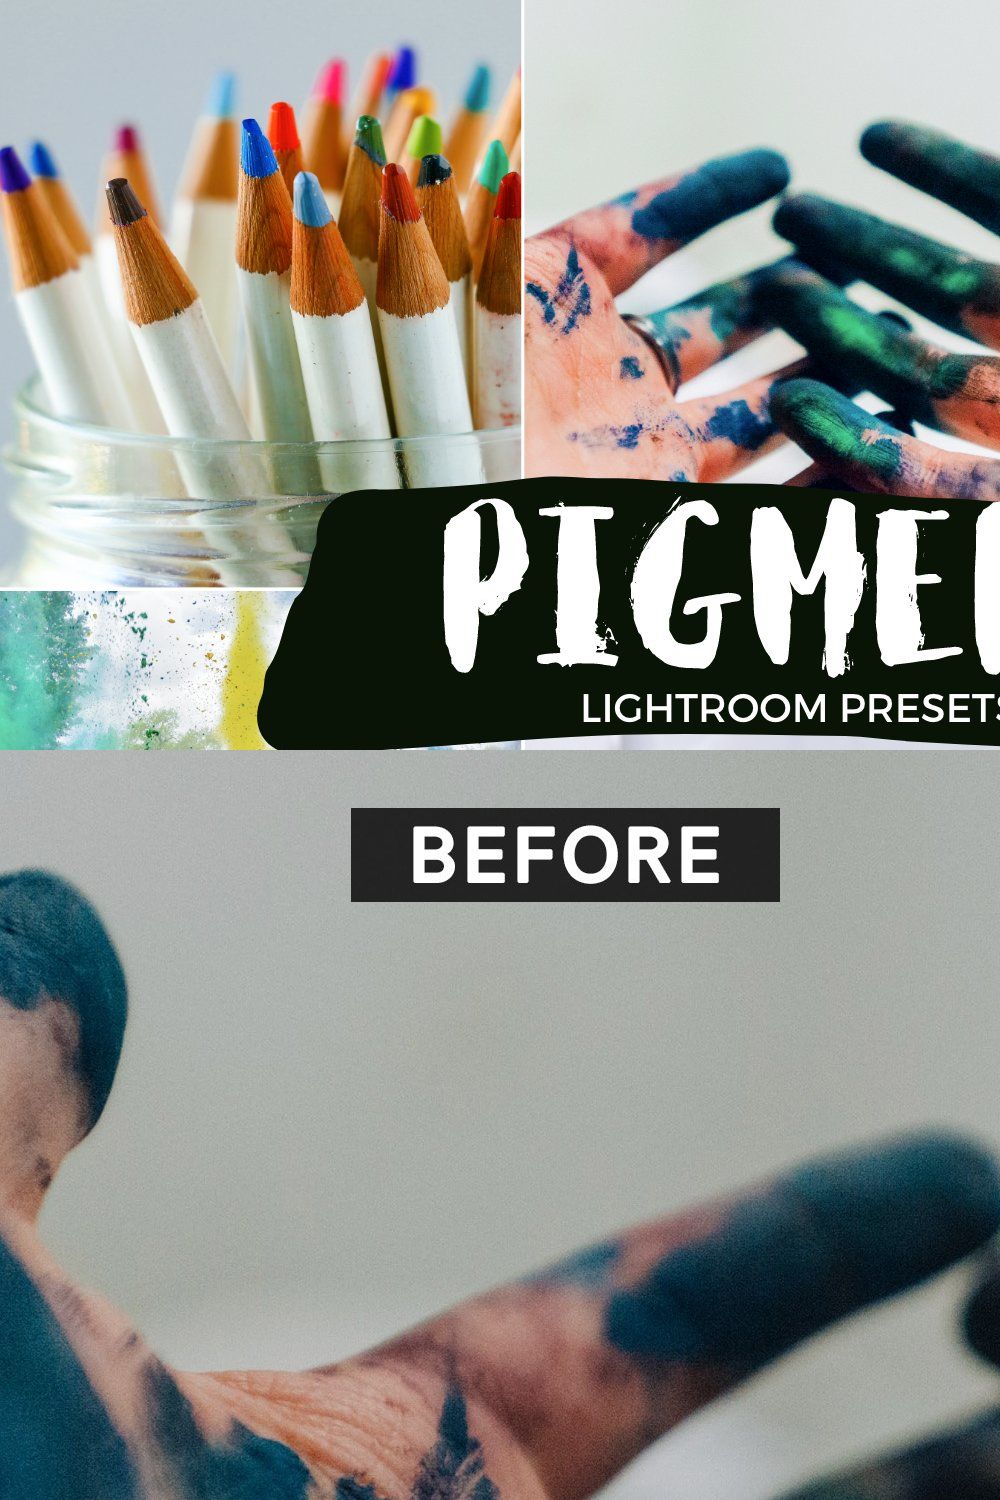 10 Lightroom Presets - Pigment pinterest preview image.